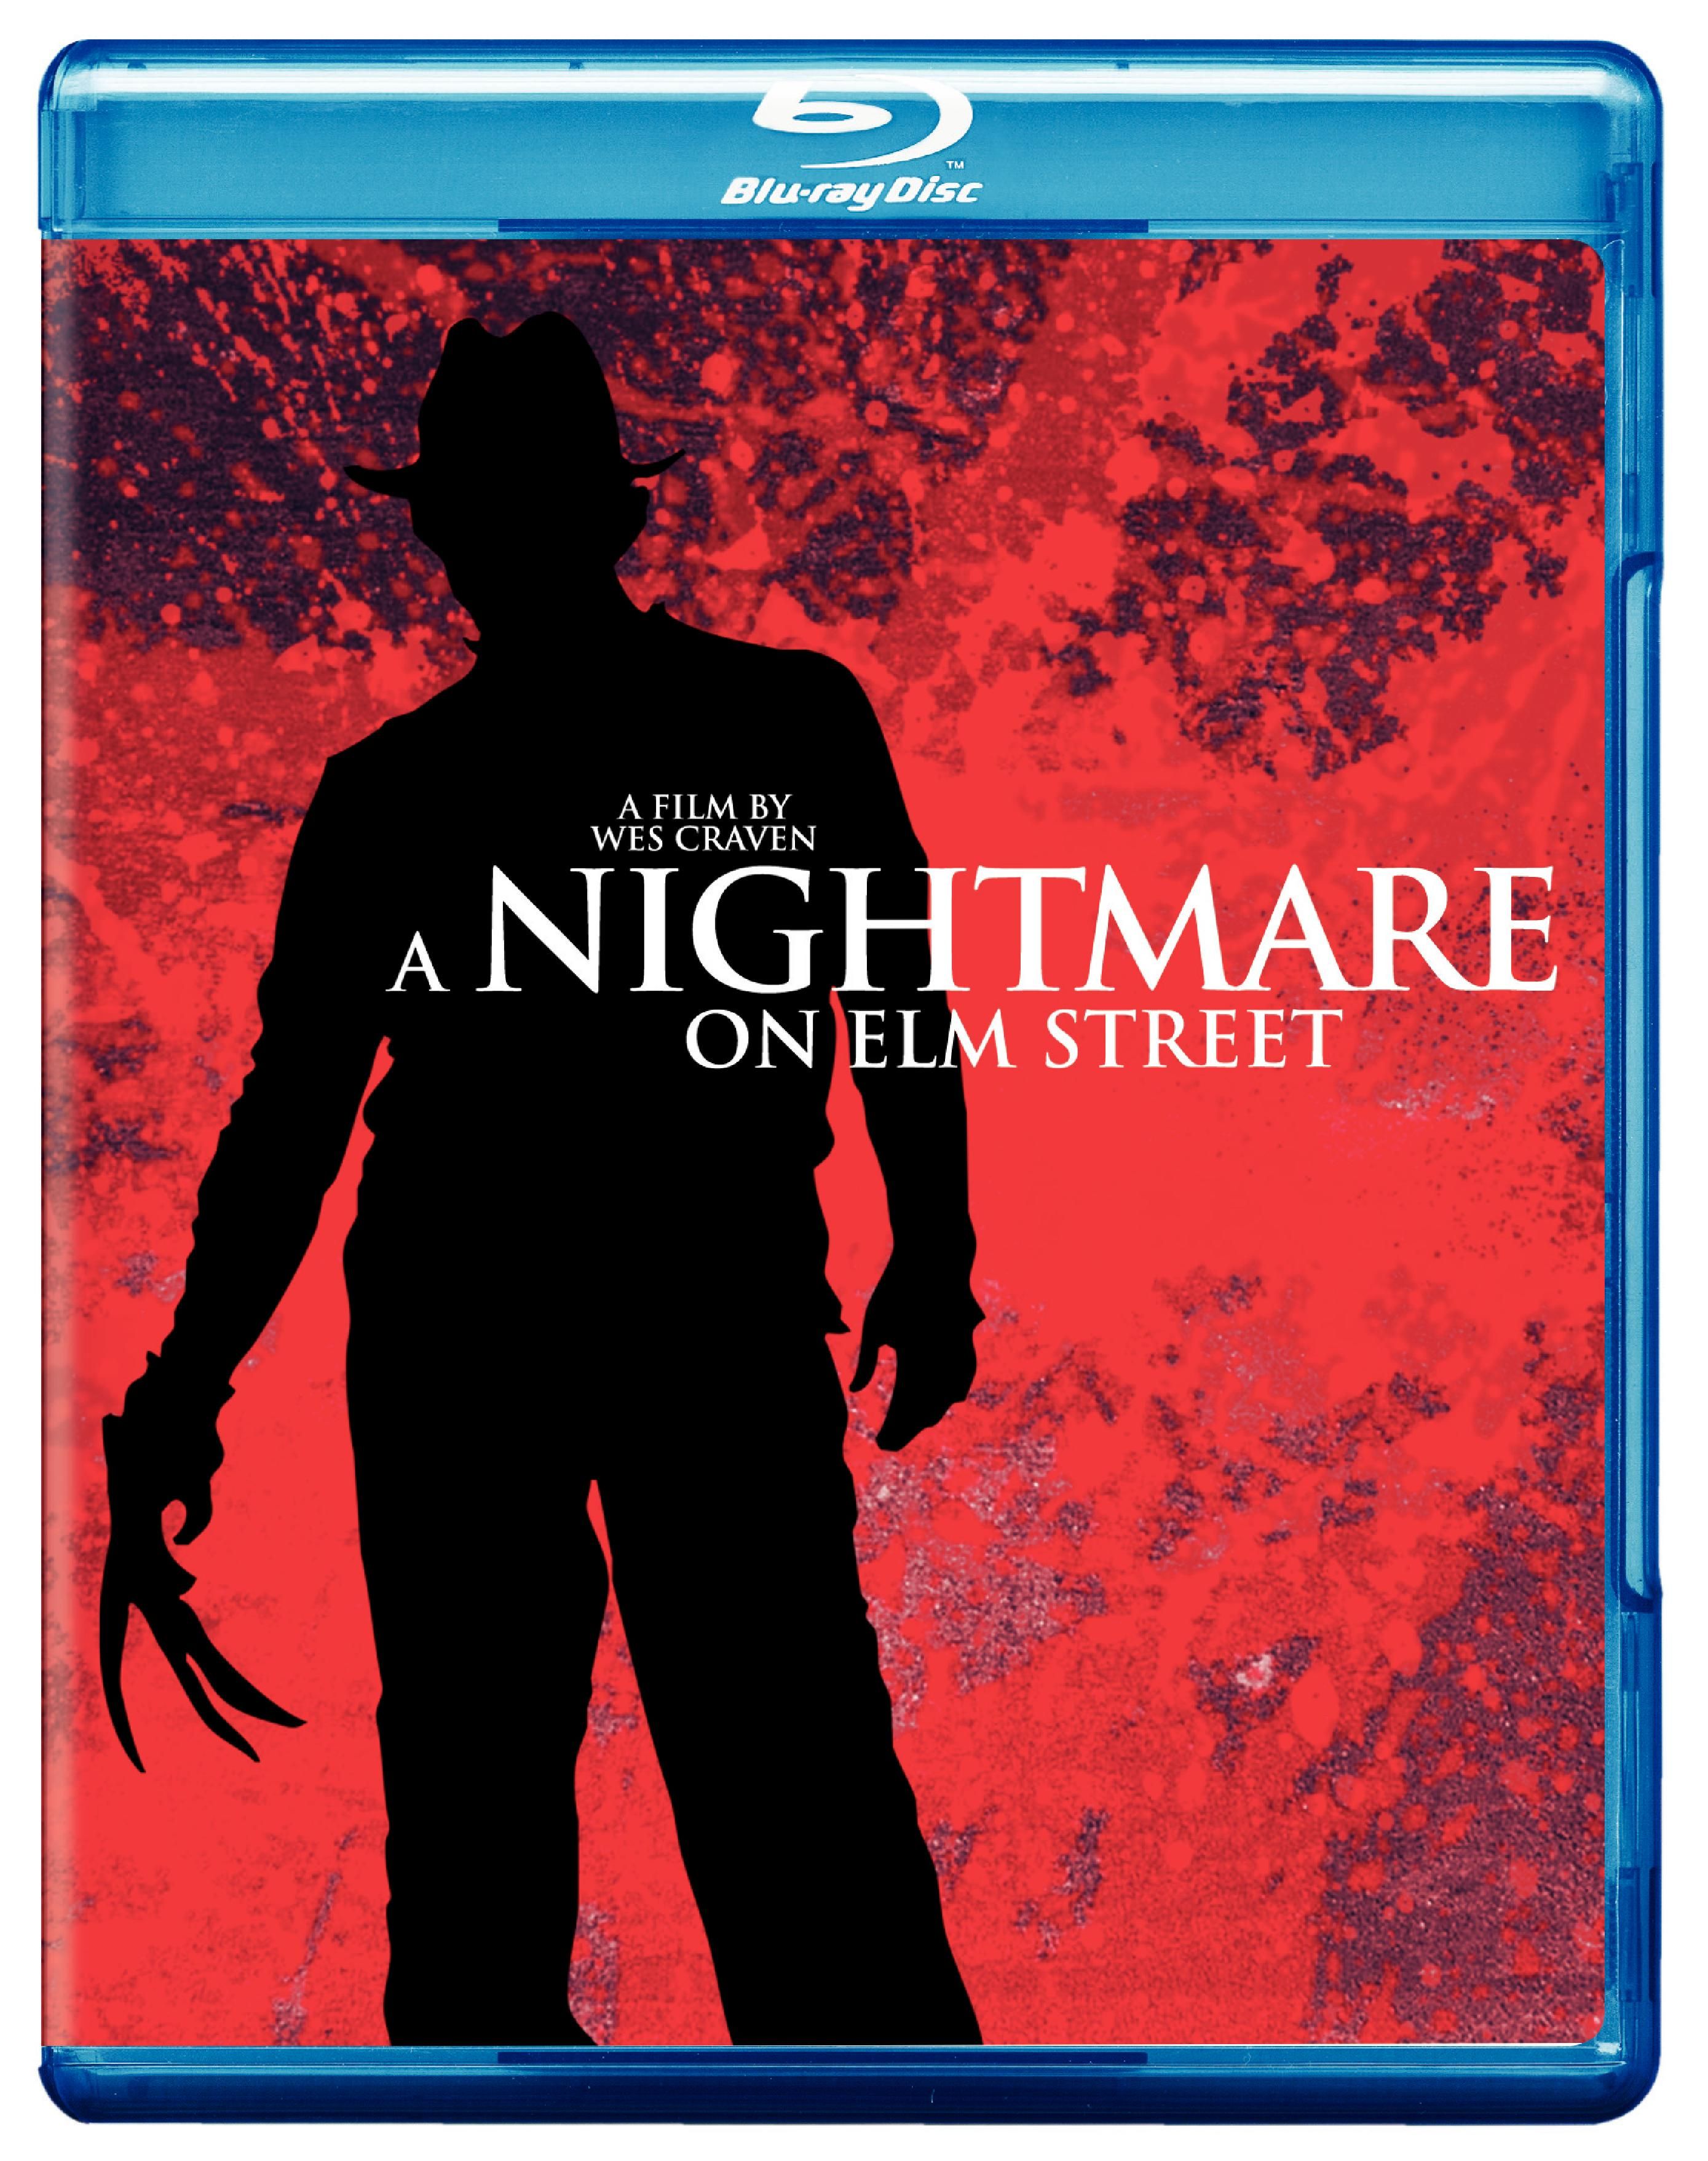 A Nightmare On Elm Street (1984) Cast